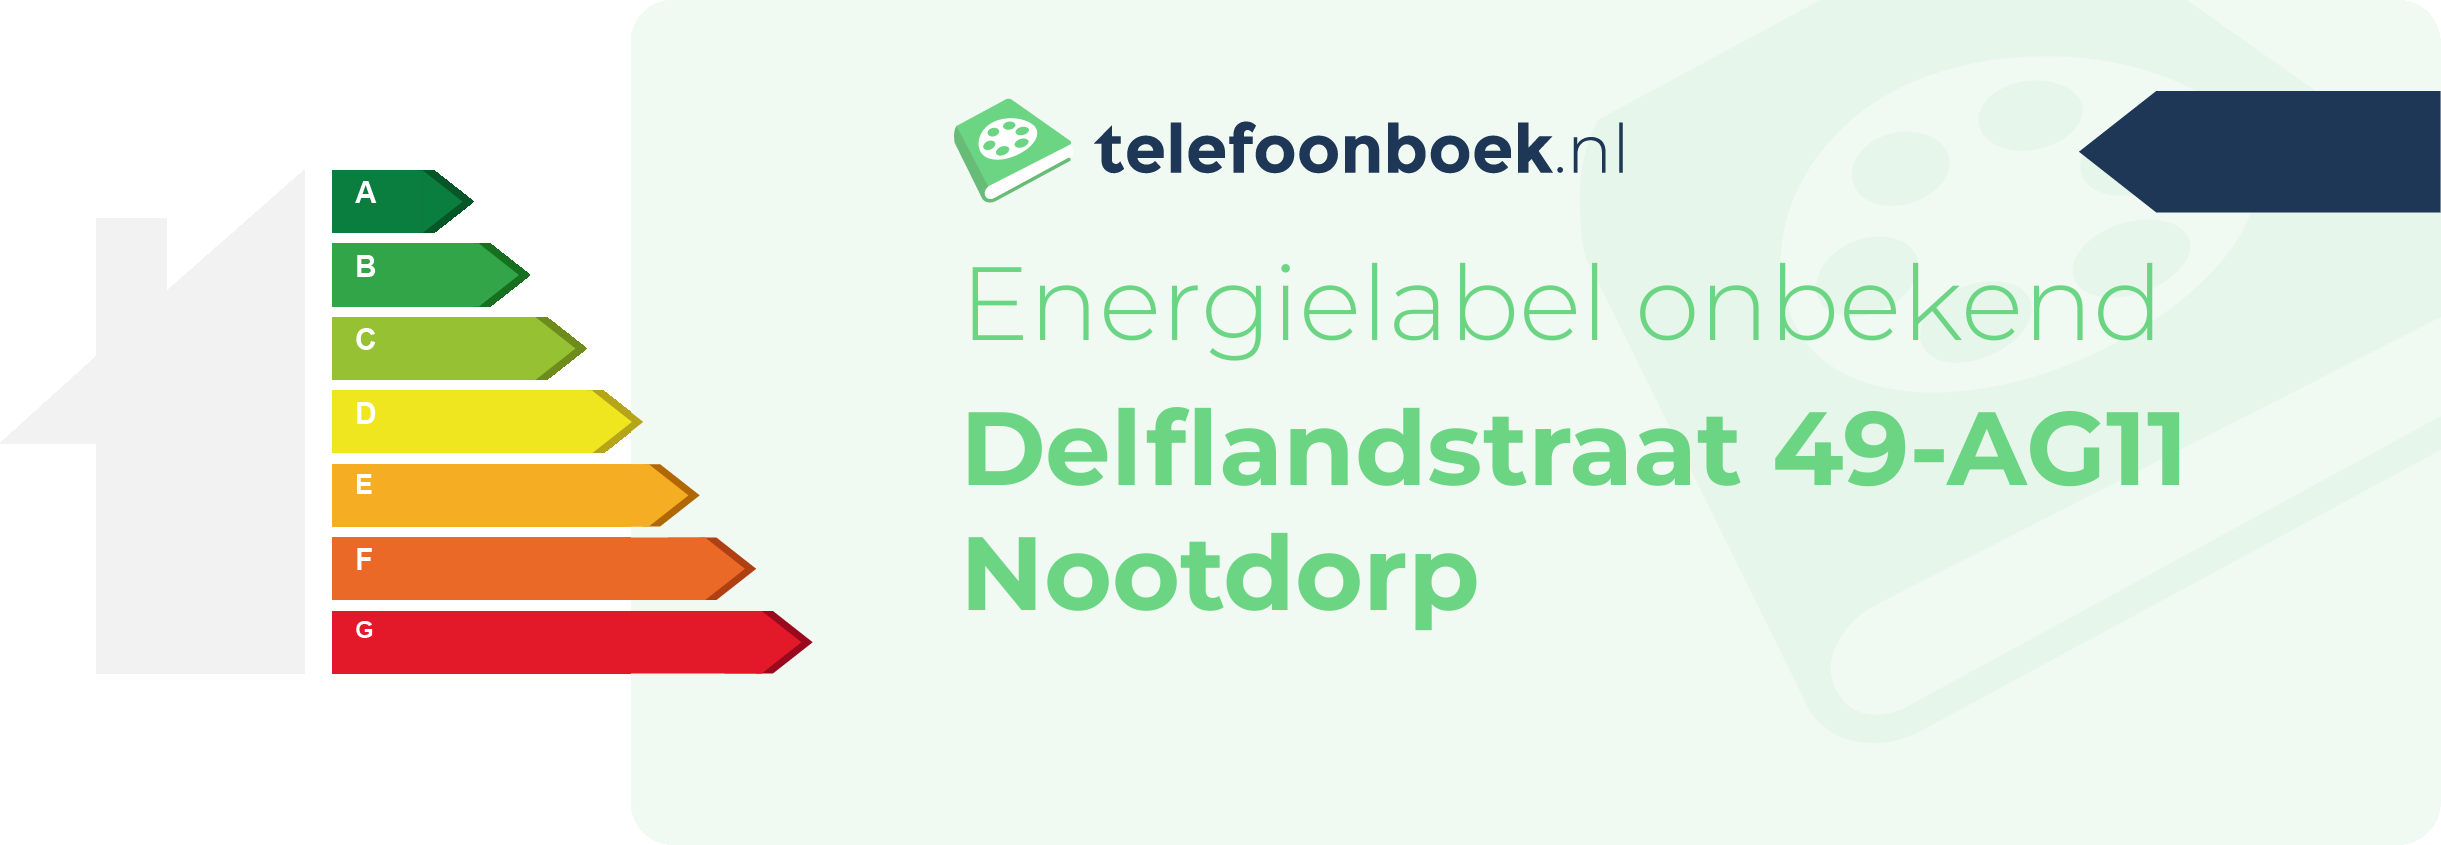 Energielabel Delflandstraat 49-AG11 Nootdorp